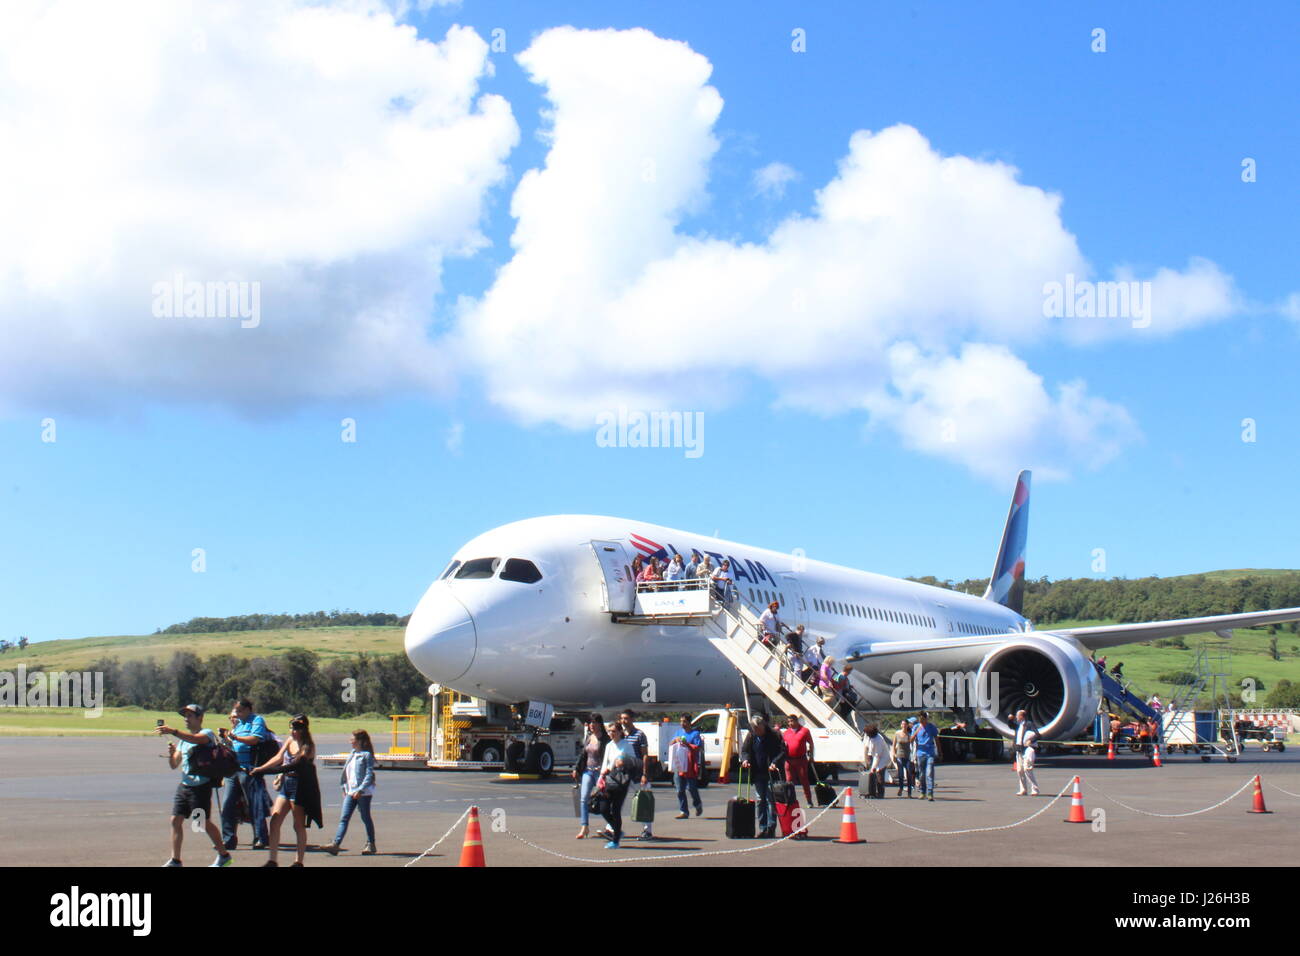 Passengers disembarking at Easter Island airport Stock Photo